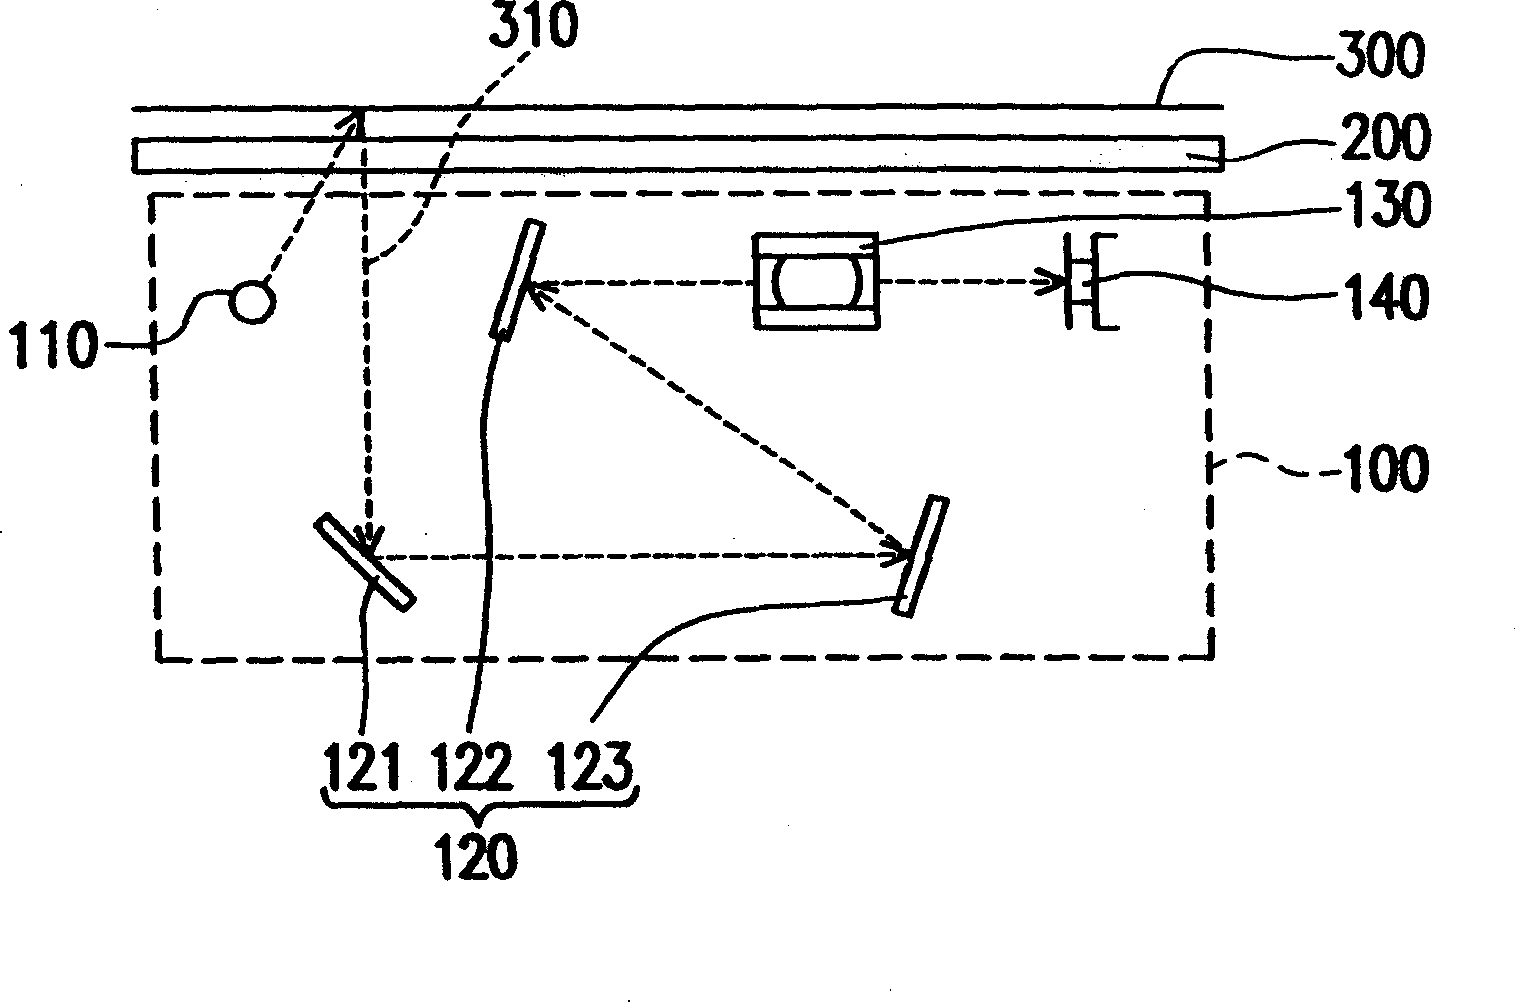 Light path folding apparatus